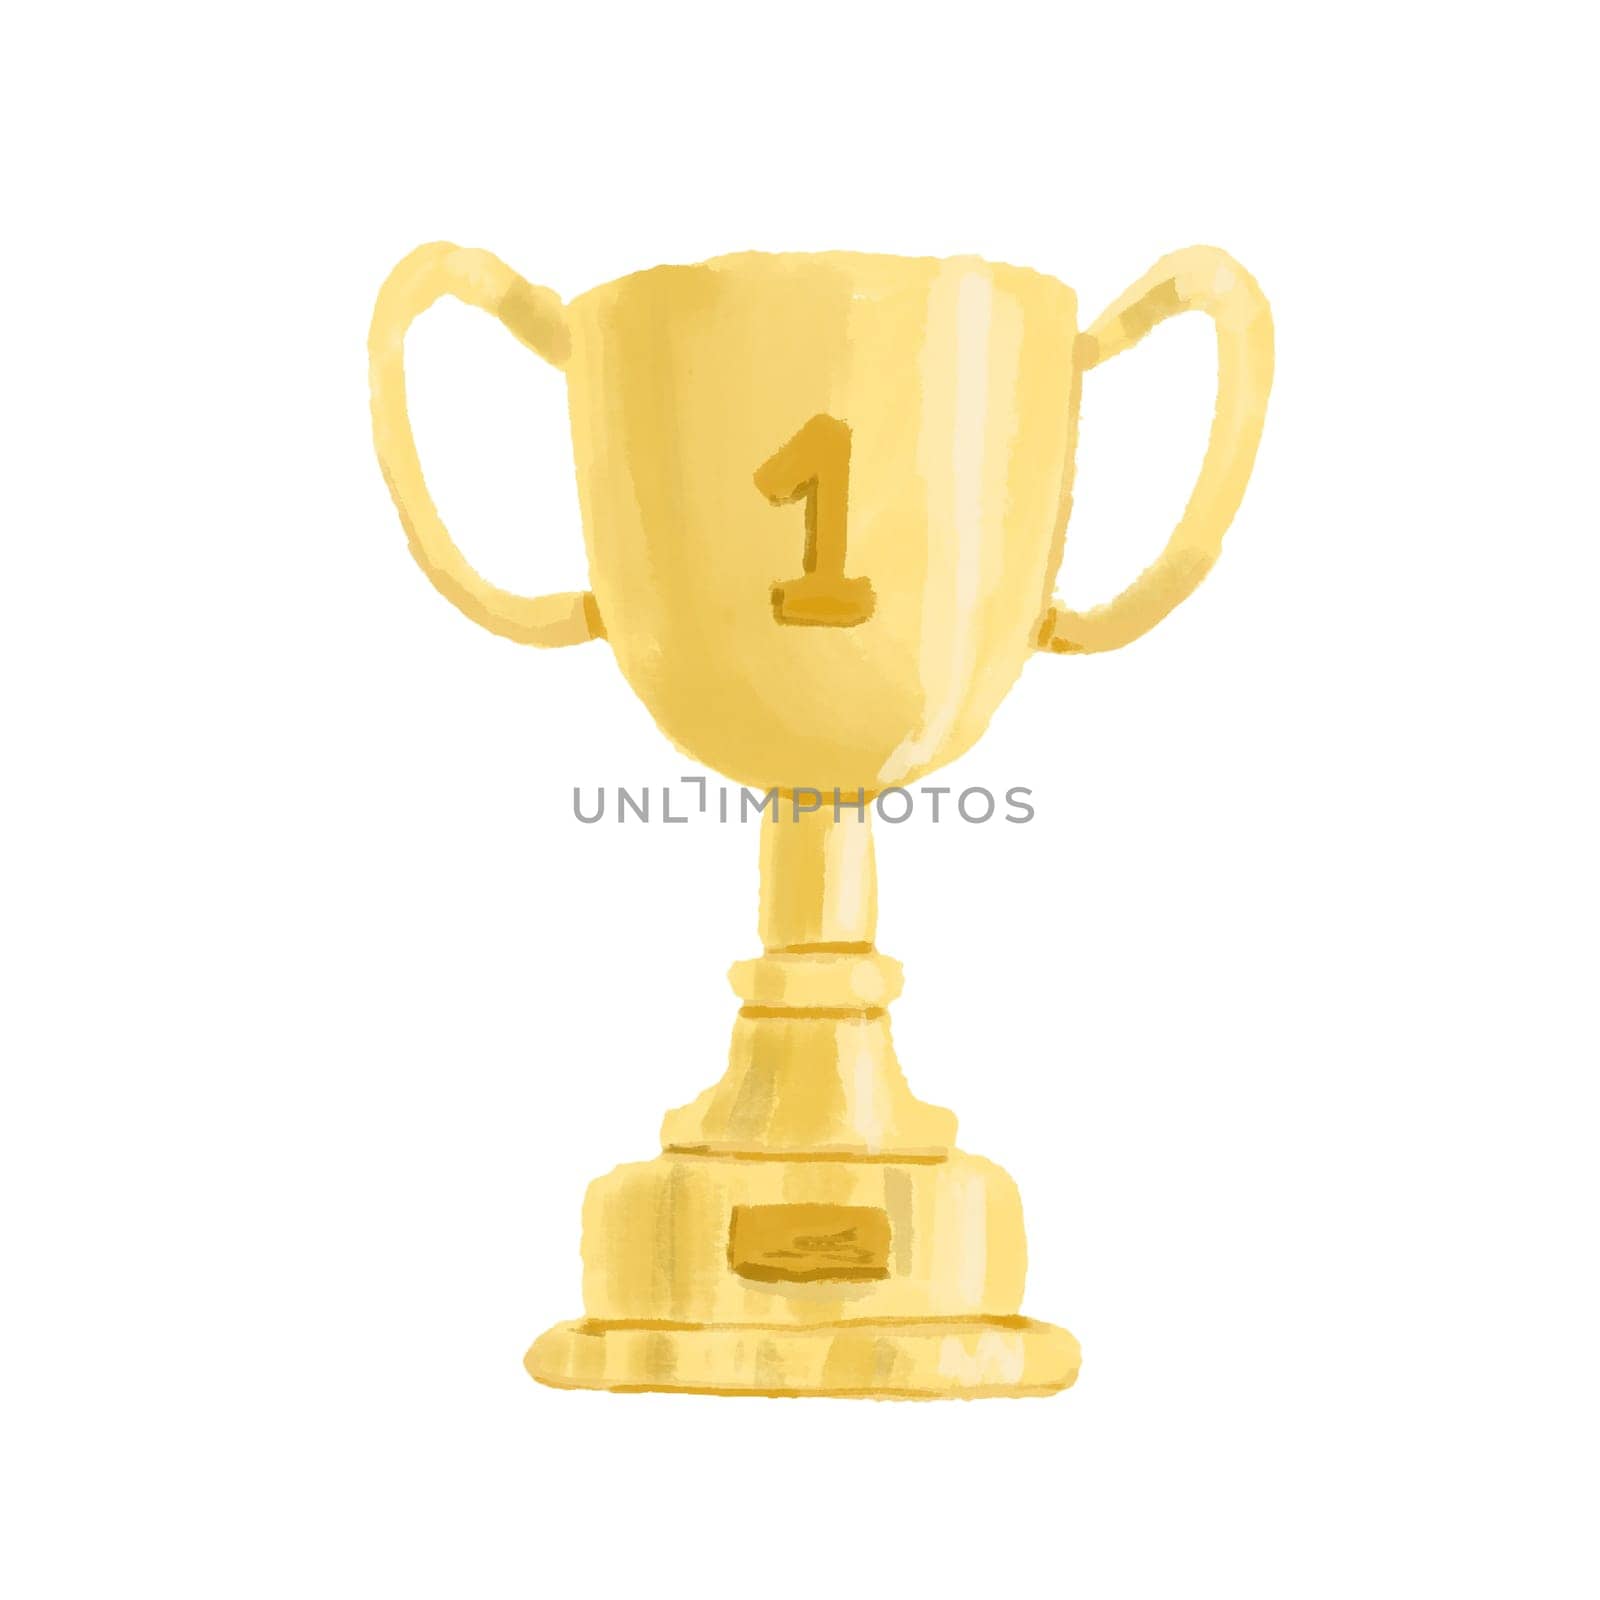 Hand drawn golden winner trophy isolated on white background. Sport winner prize illustration.